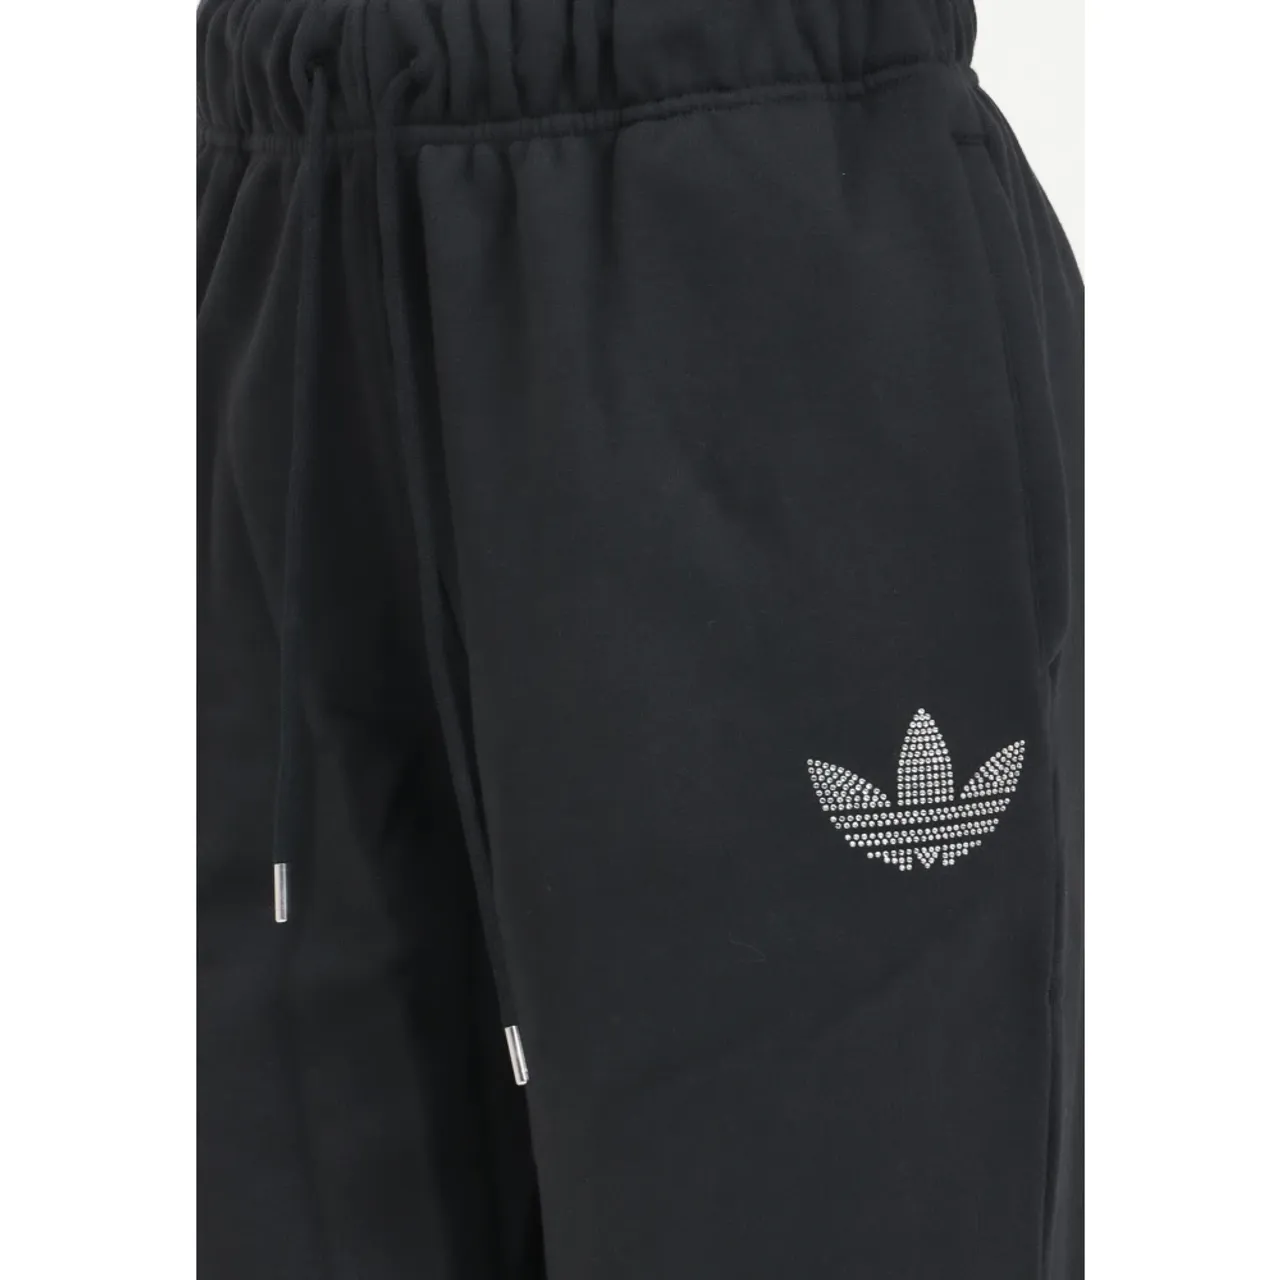 Sweatpants Adidas Originals